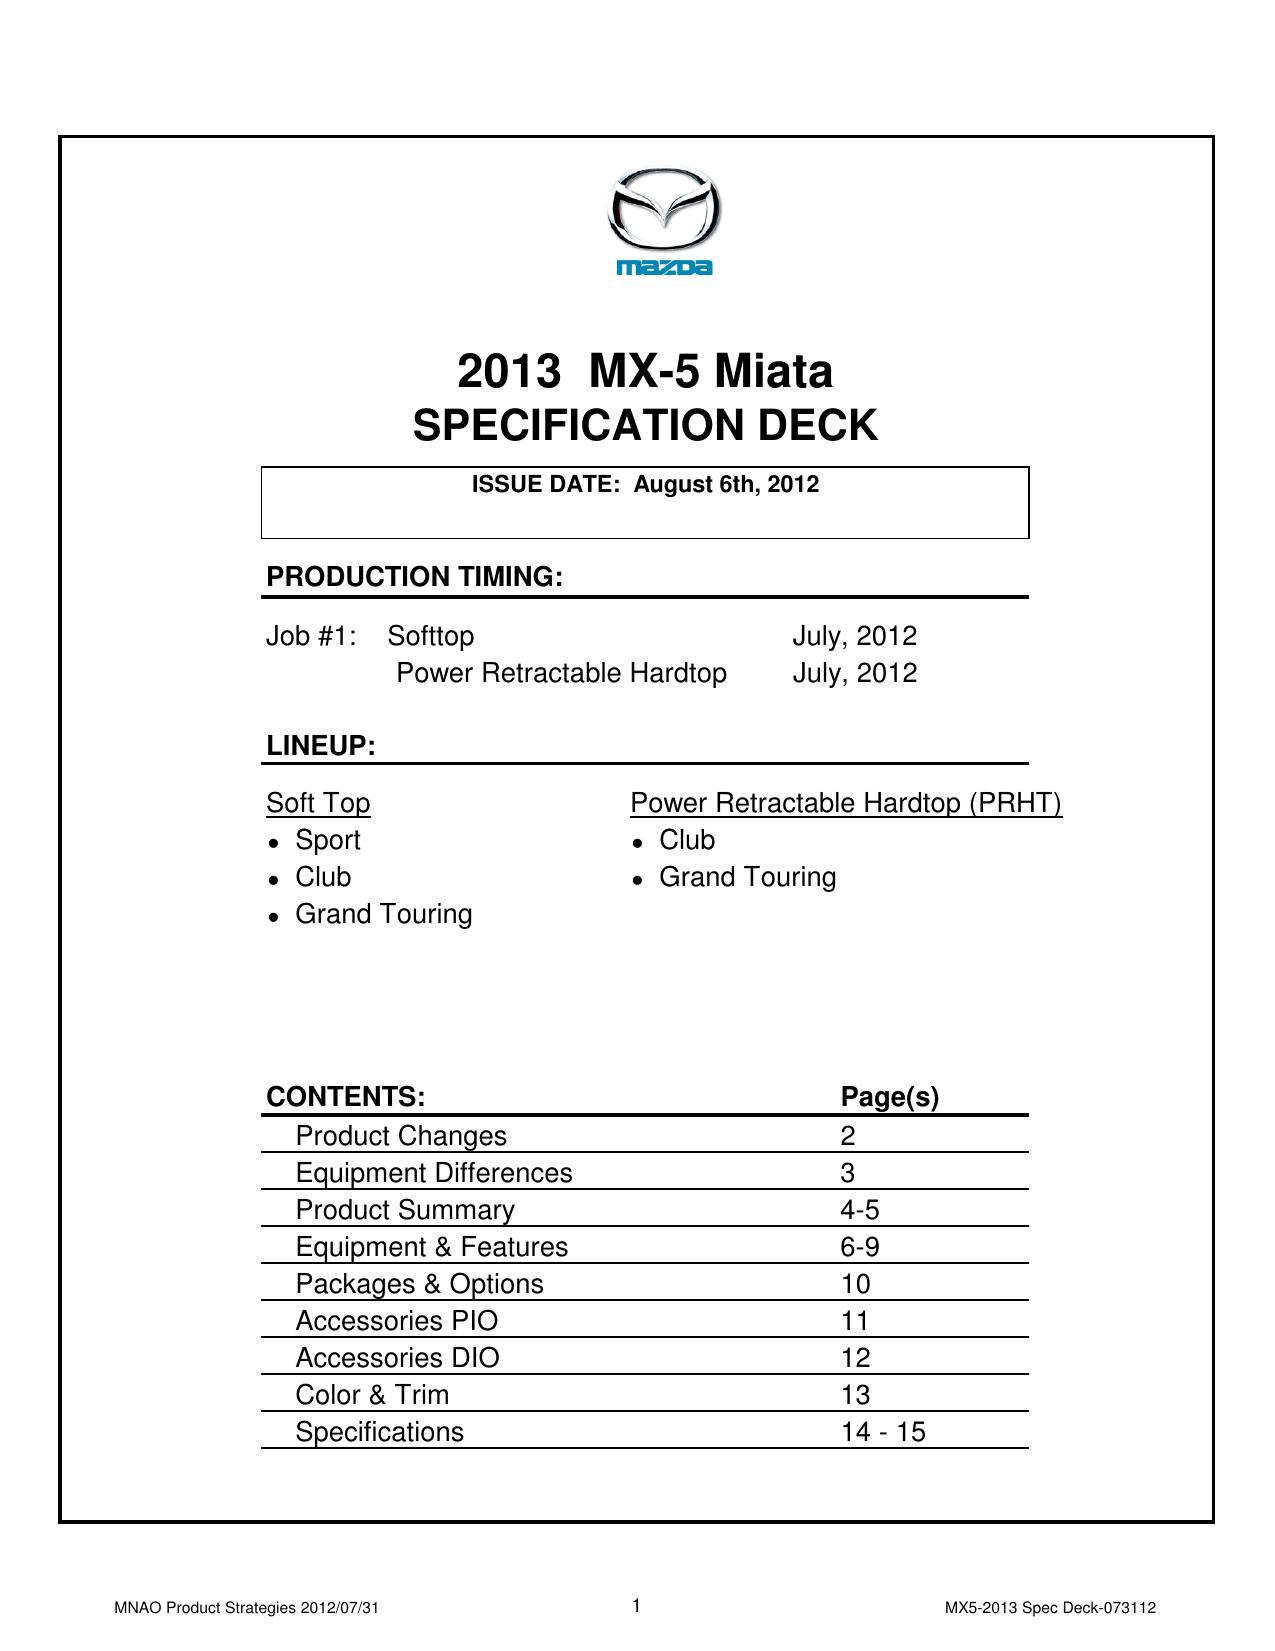 2013-mx-5-miata-specification-deck.pdf